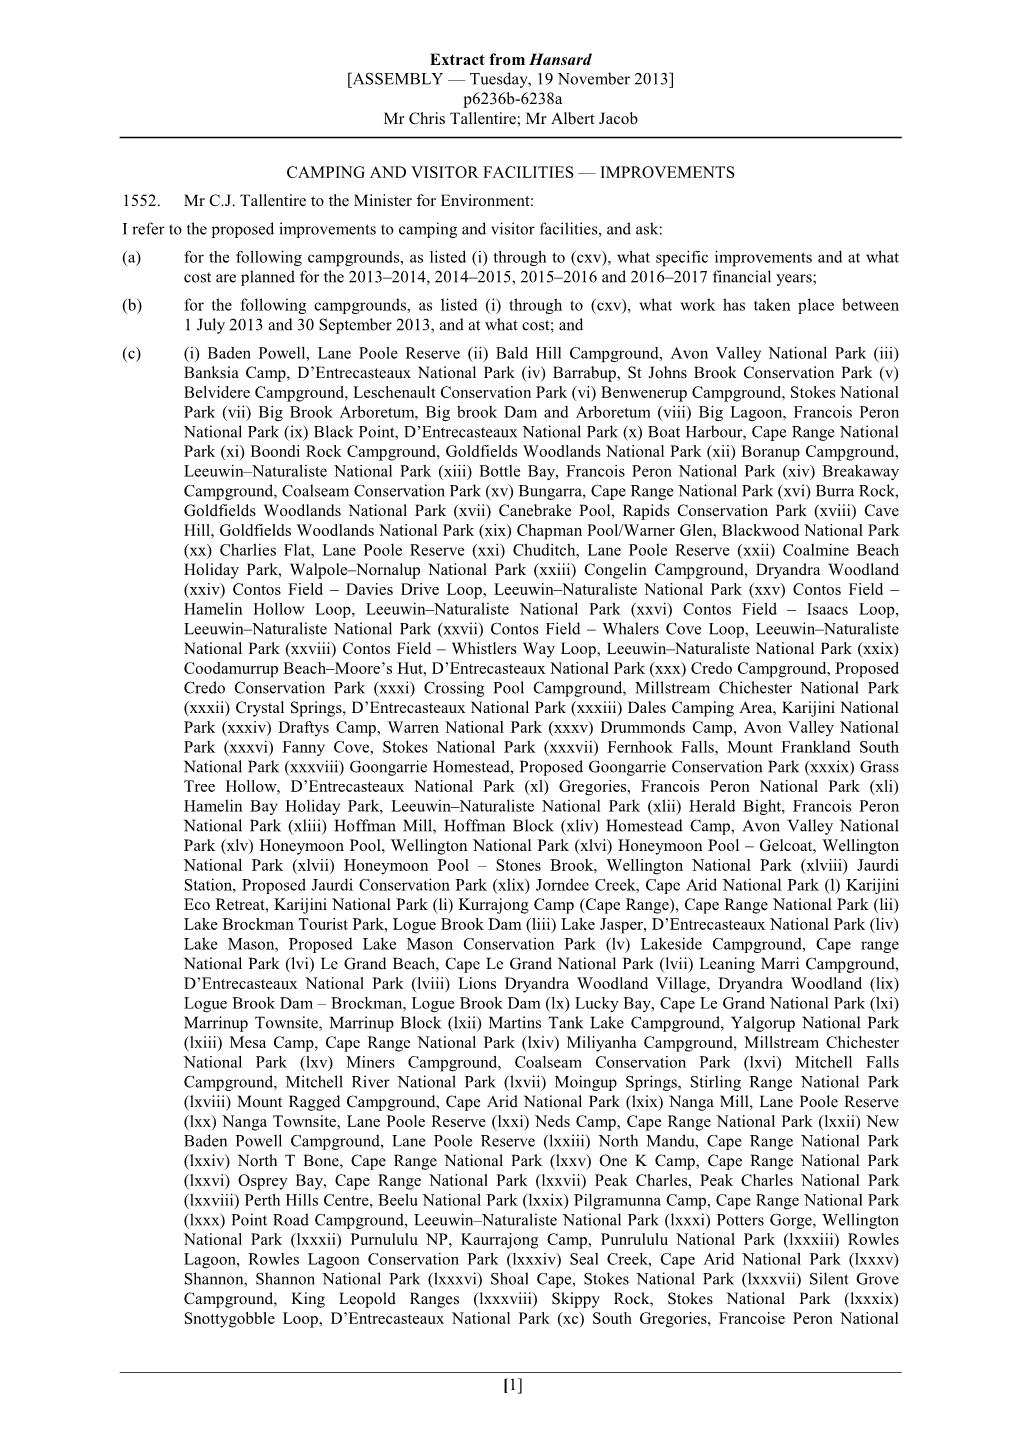 Extract from Hansard [ASSEMBLY — Tuesday, 19 November 2013] P6236b-6238A Mr Chris Tallentire; Mr Albert Jacob